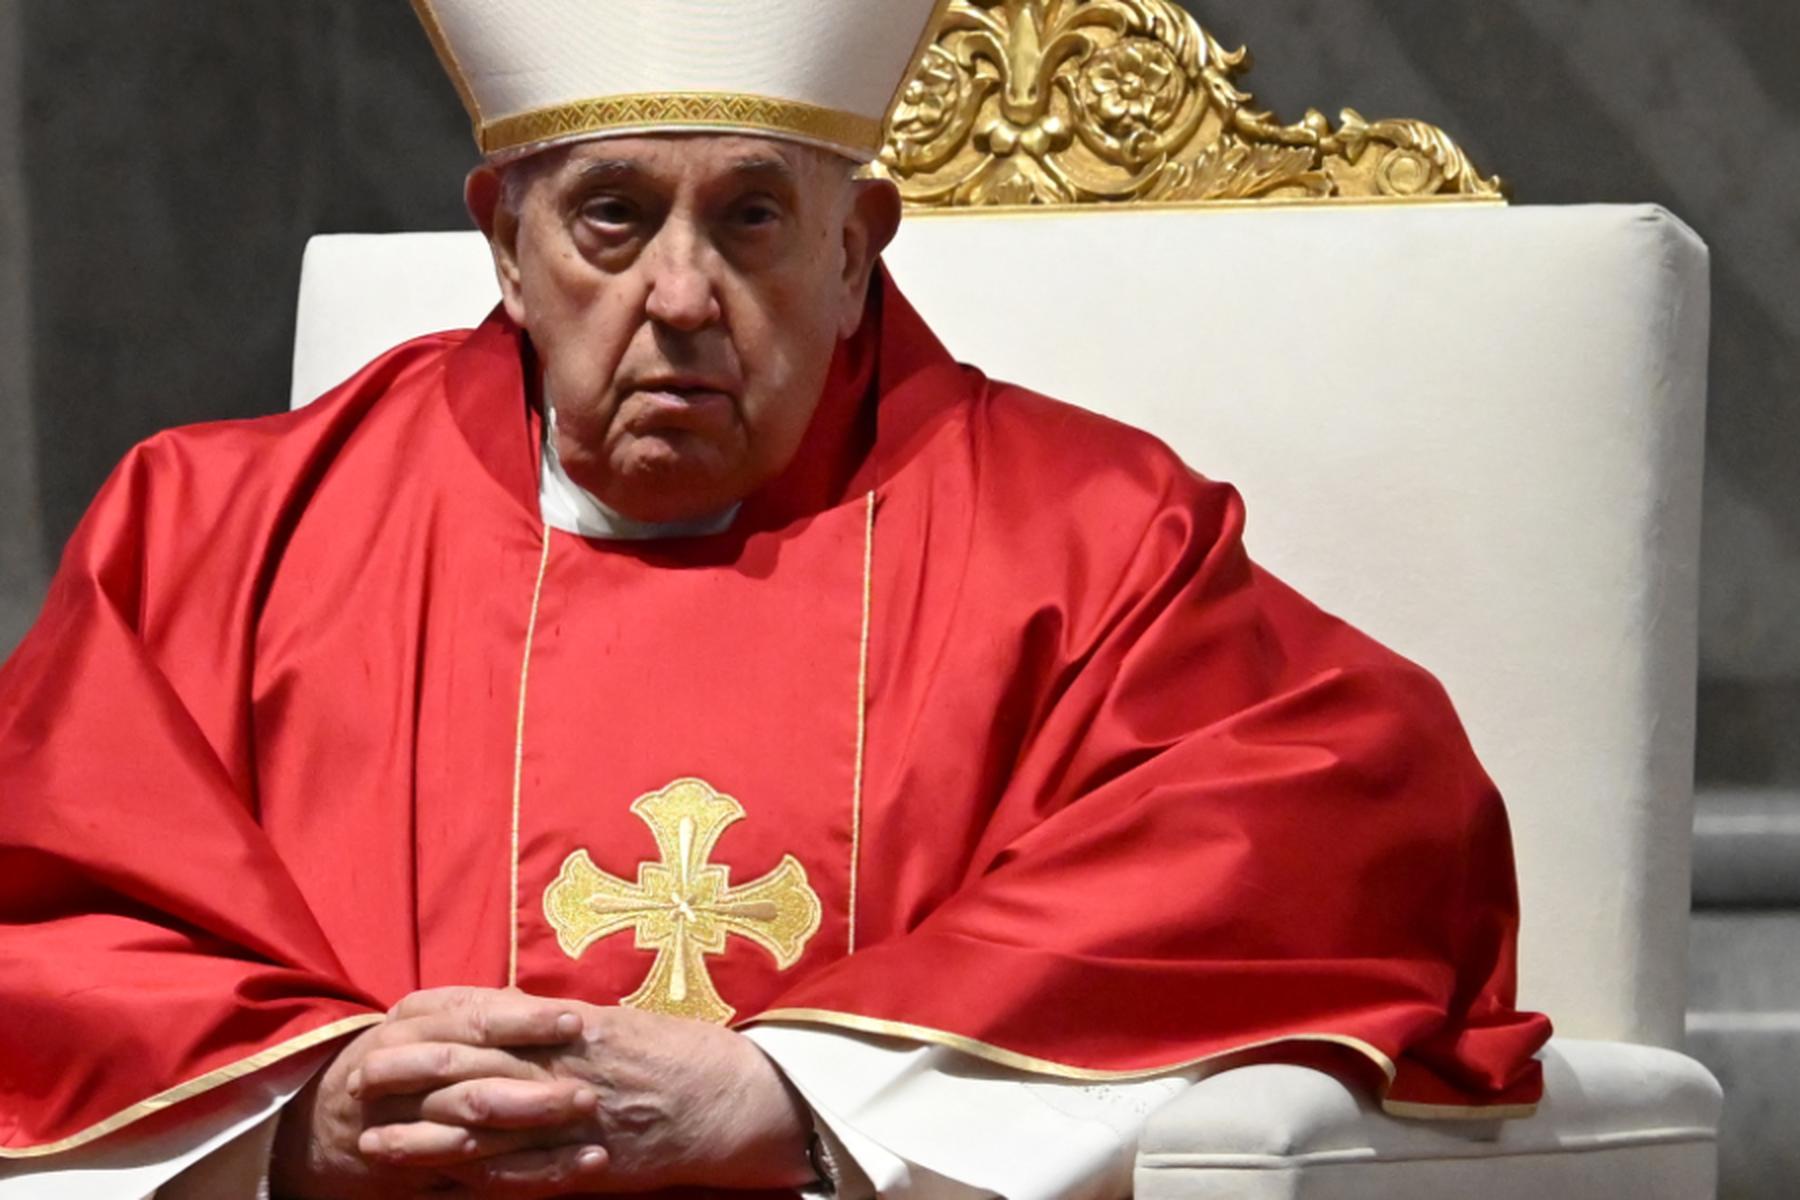 Vatikanstadt: Vatikan sagte Teilnahme des Papstes am Osterfest vorerst zu